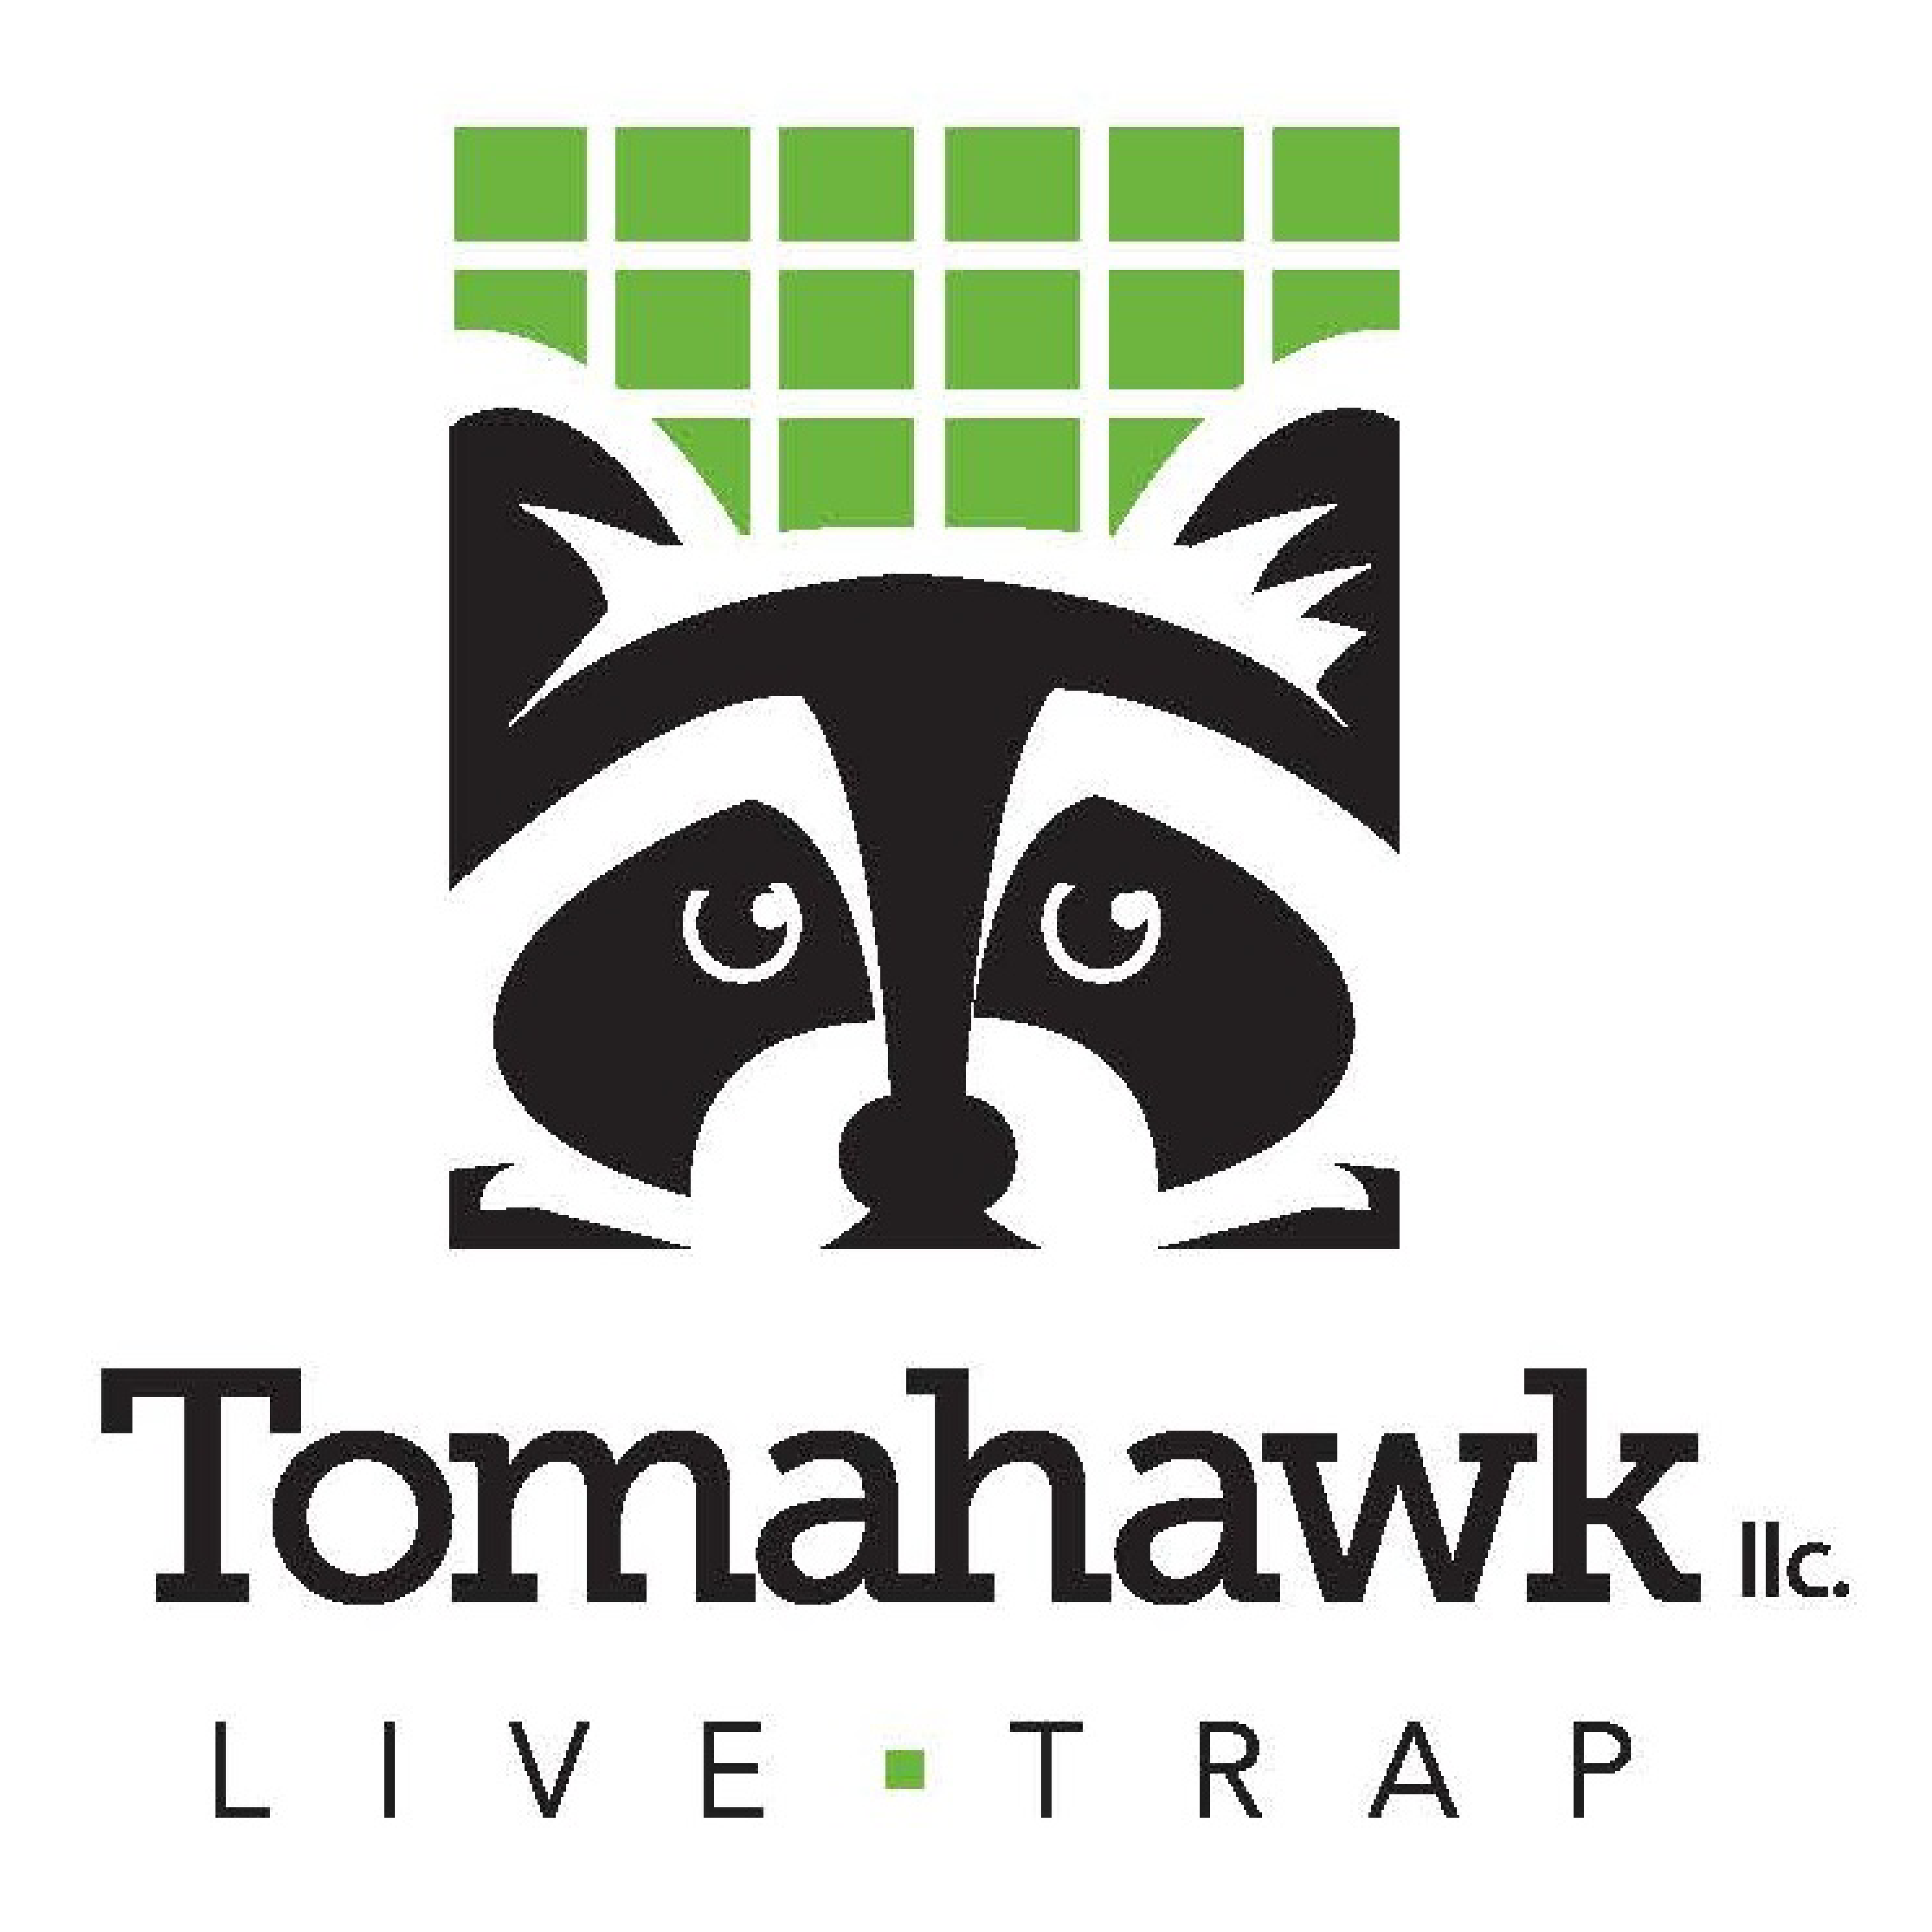 Tomahawk Live Trap